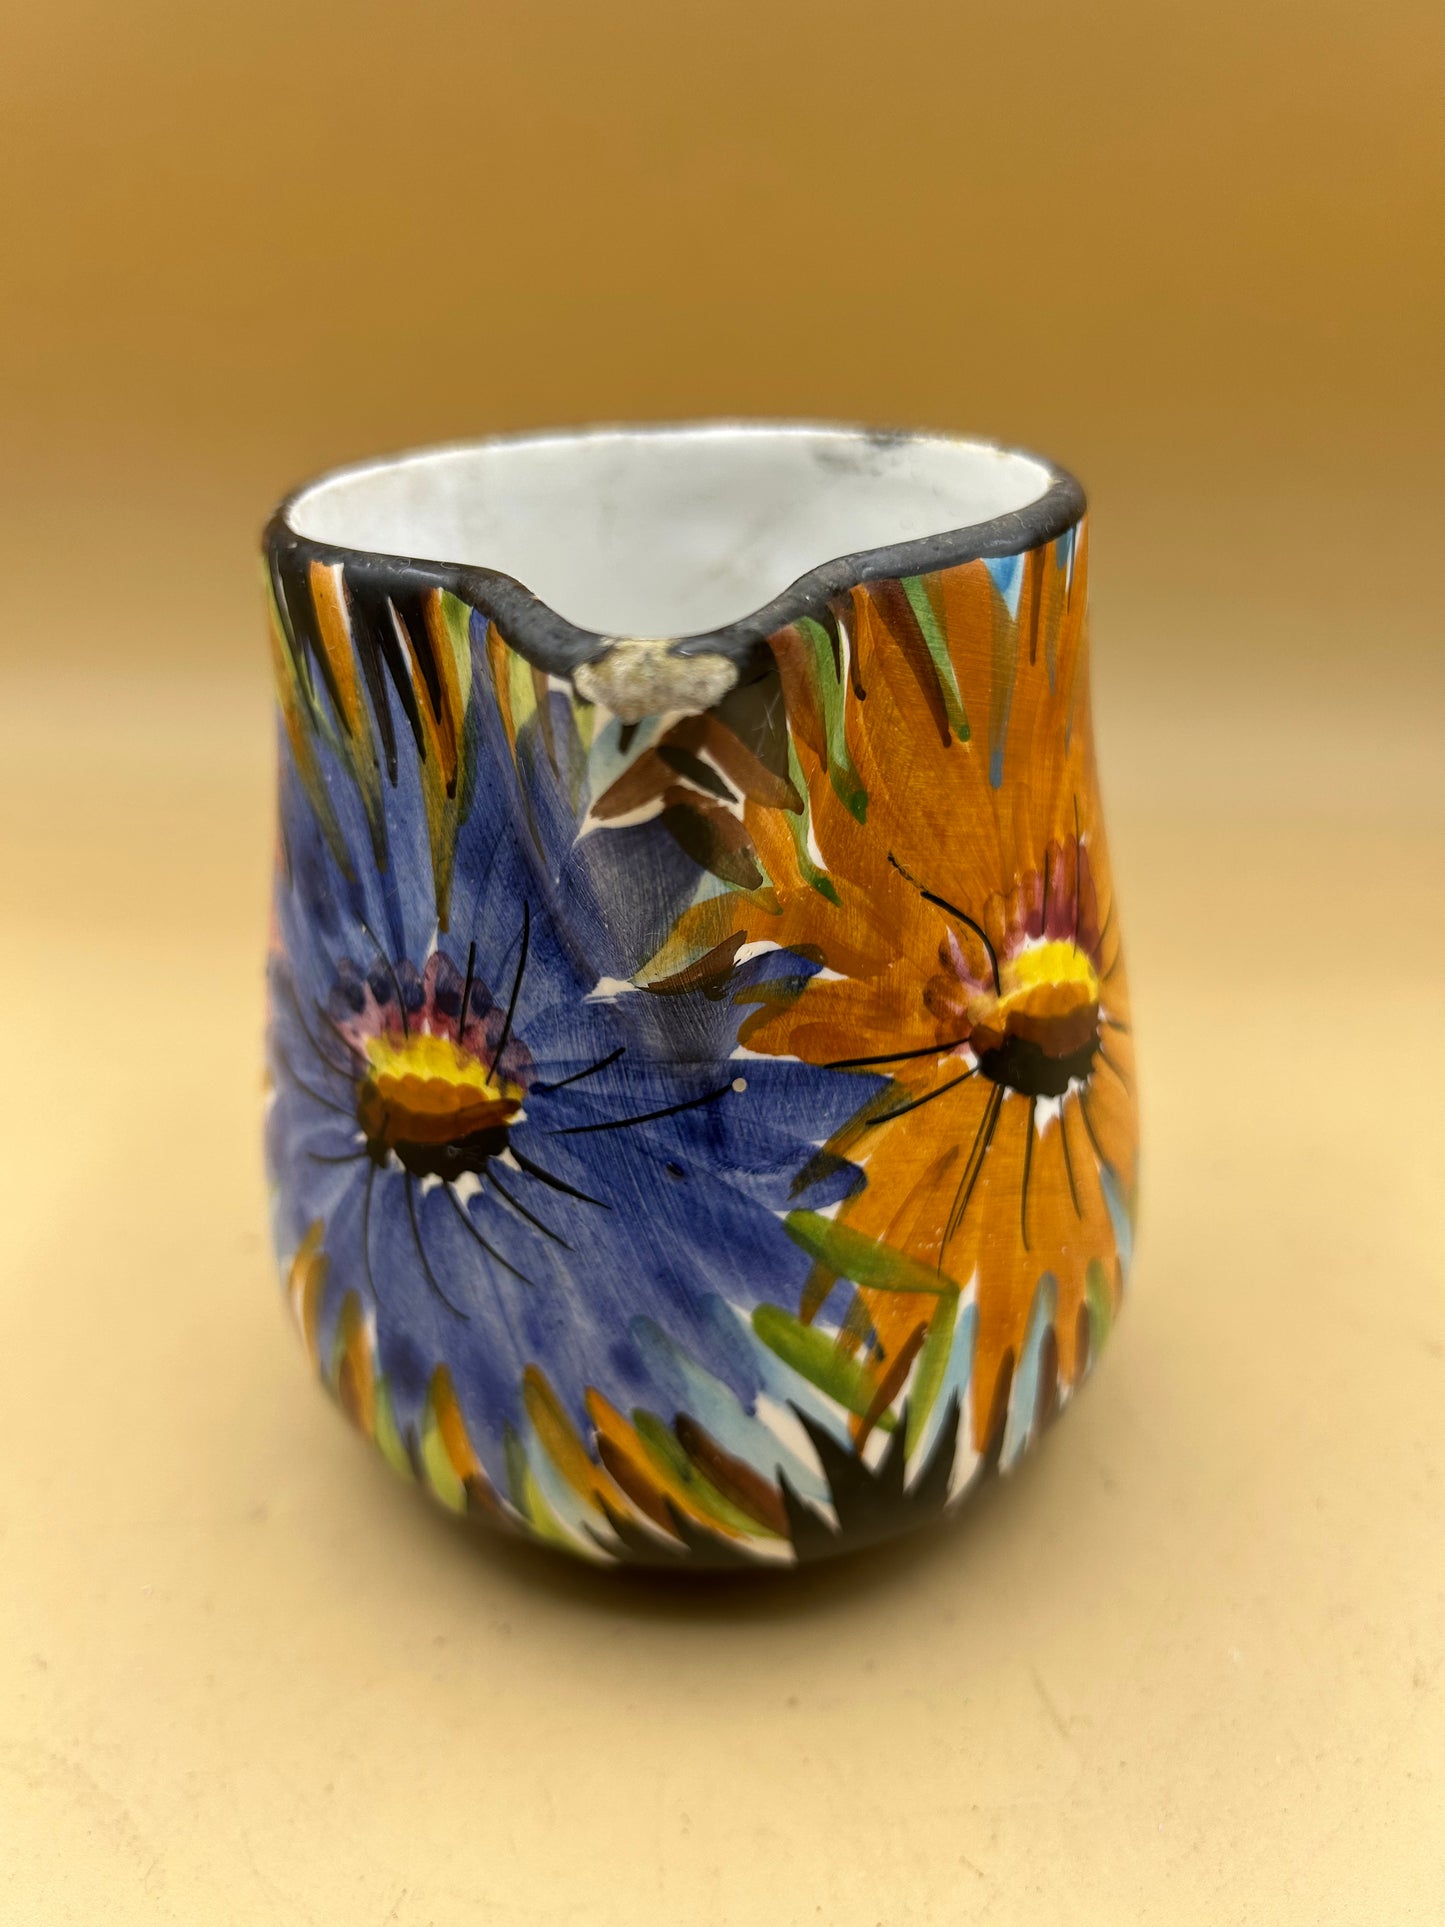 Handbemalter Keramikkrug mit Blumen